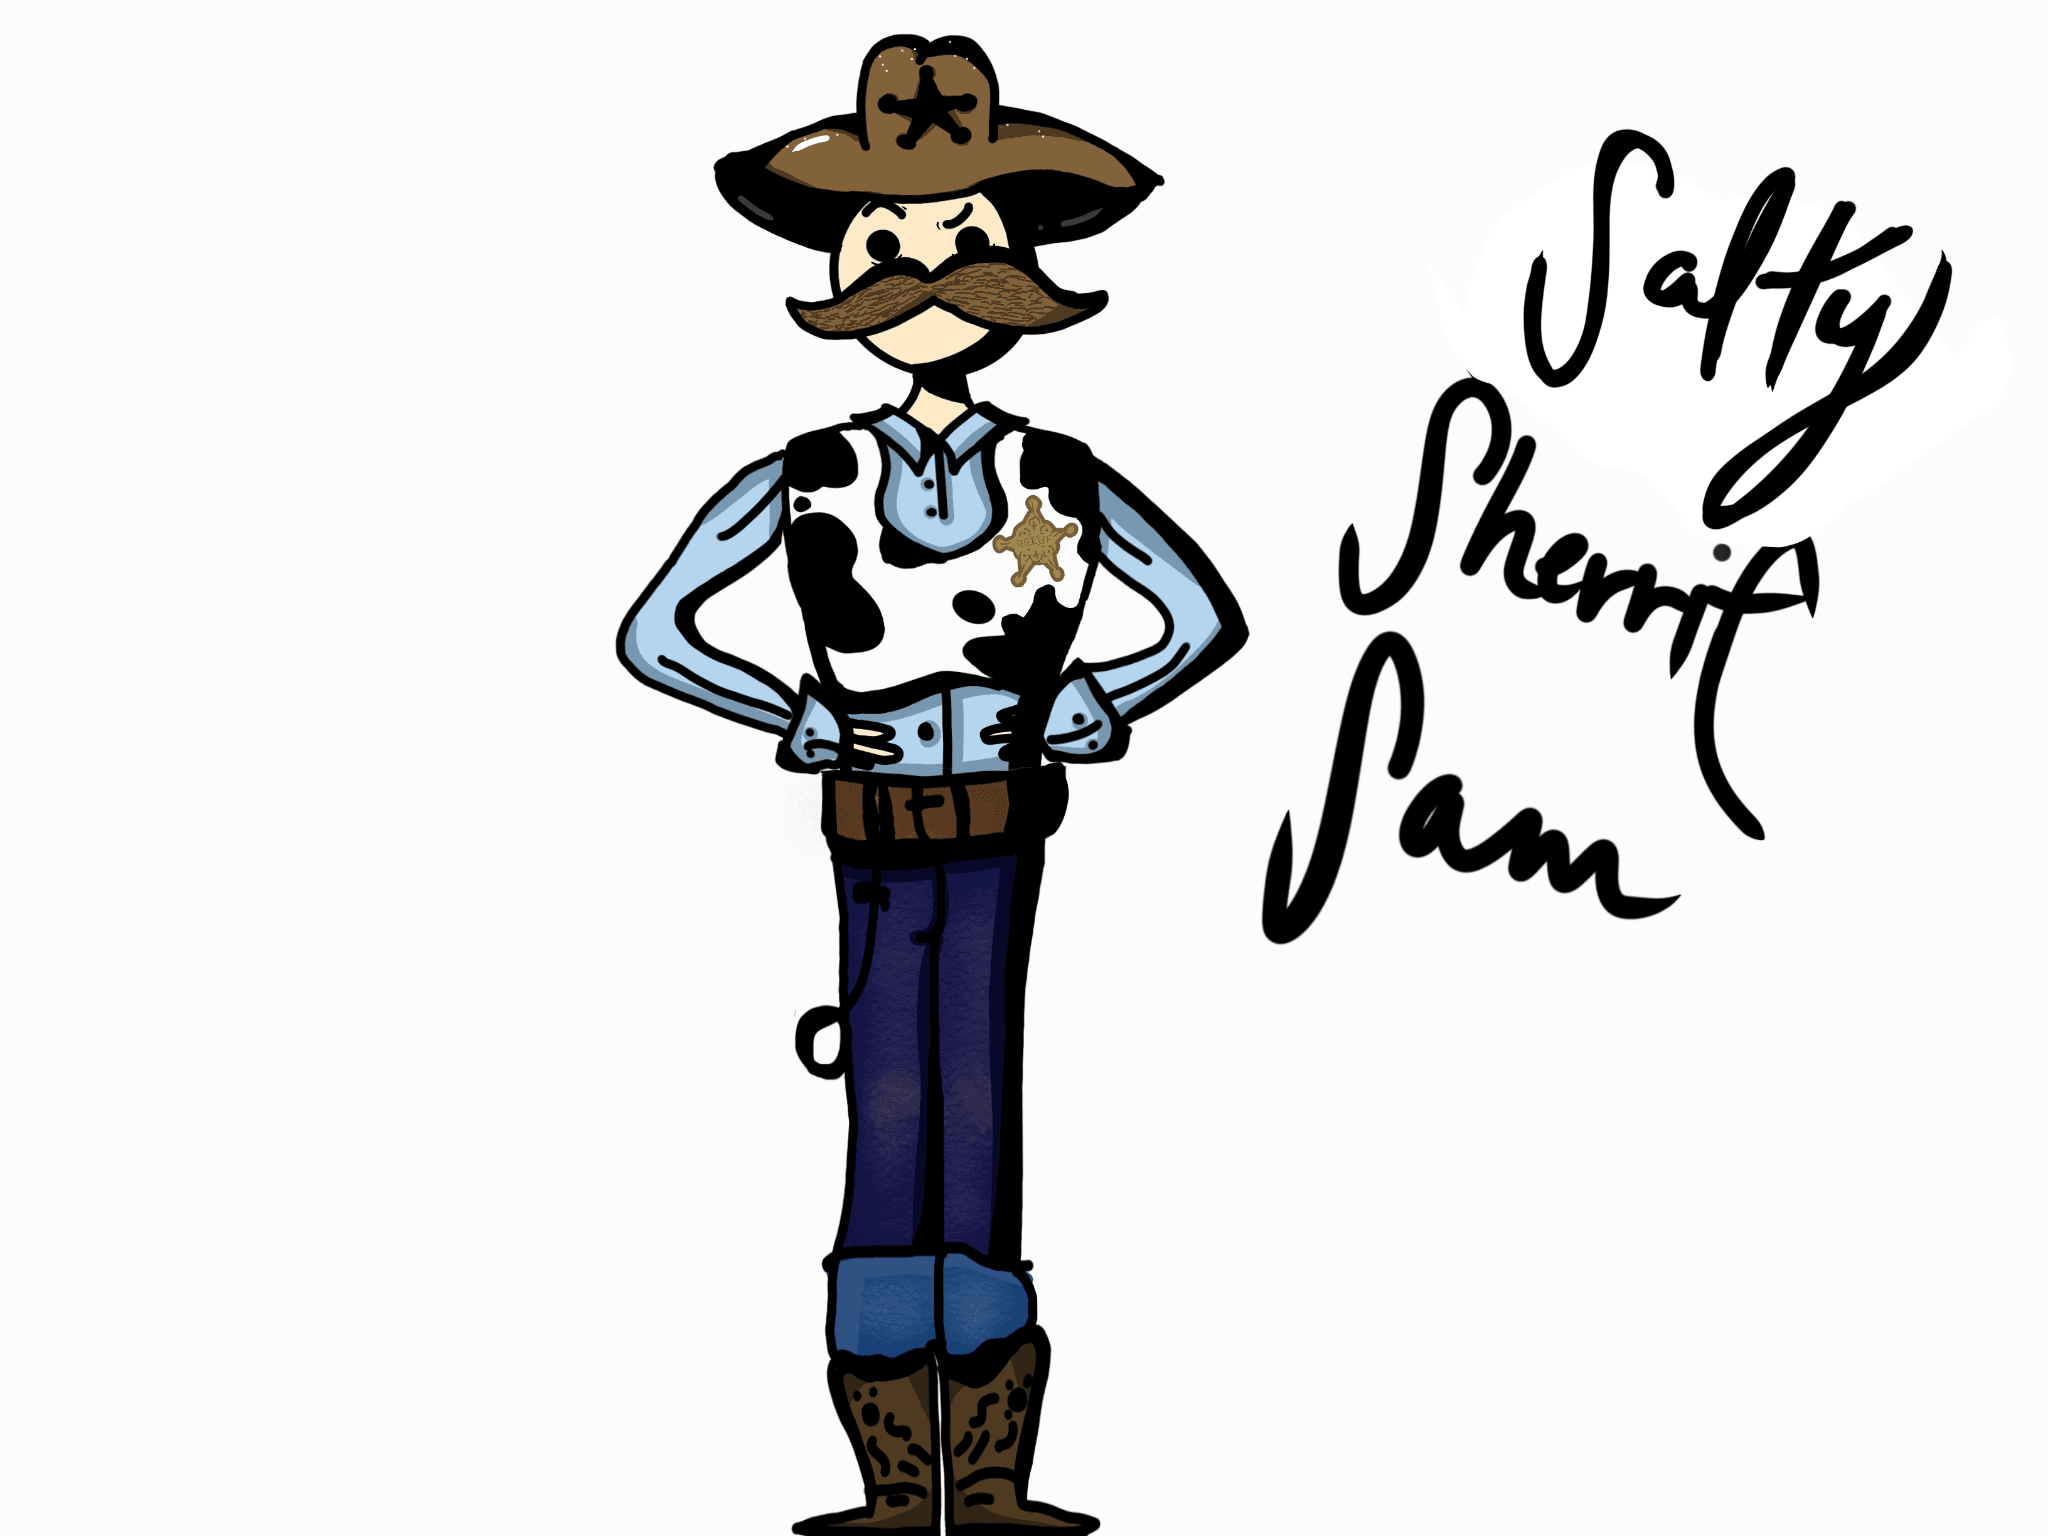 Salty Sheriff Sam